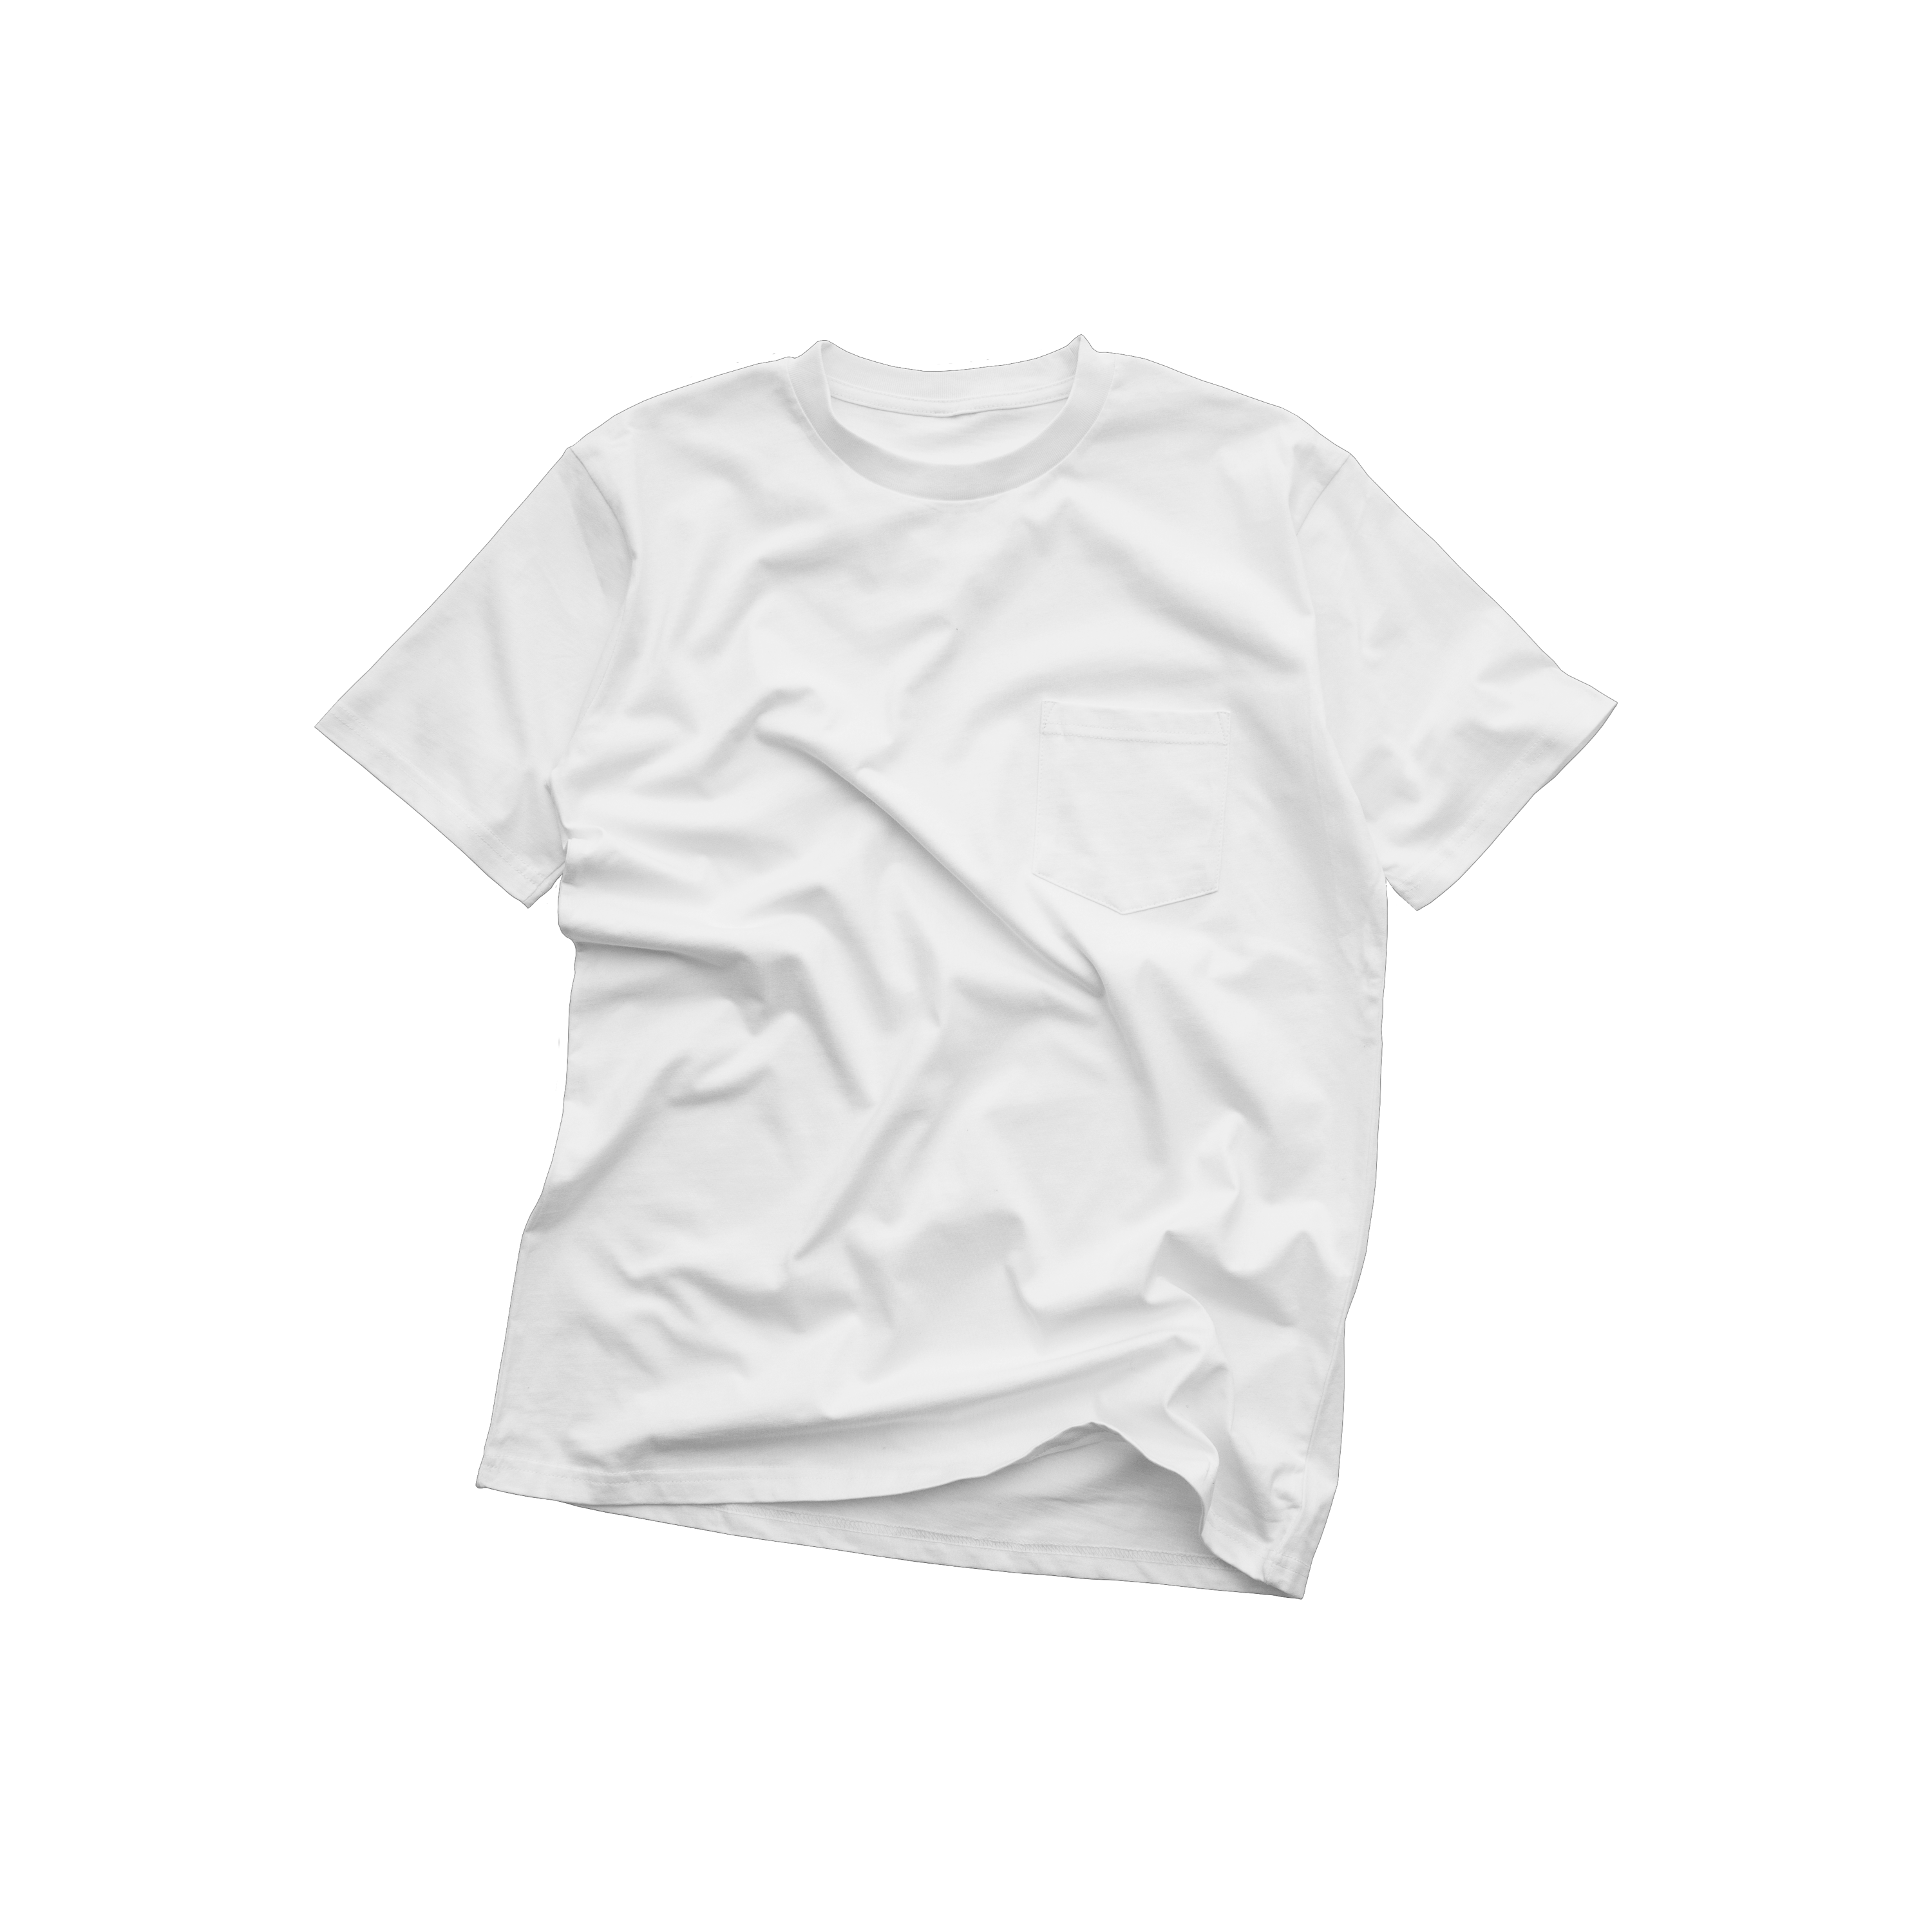 Pocket T-Shirt 001 Mockup (Front)